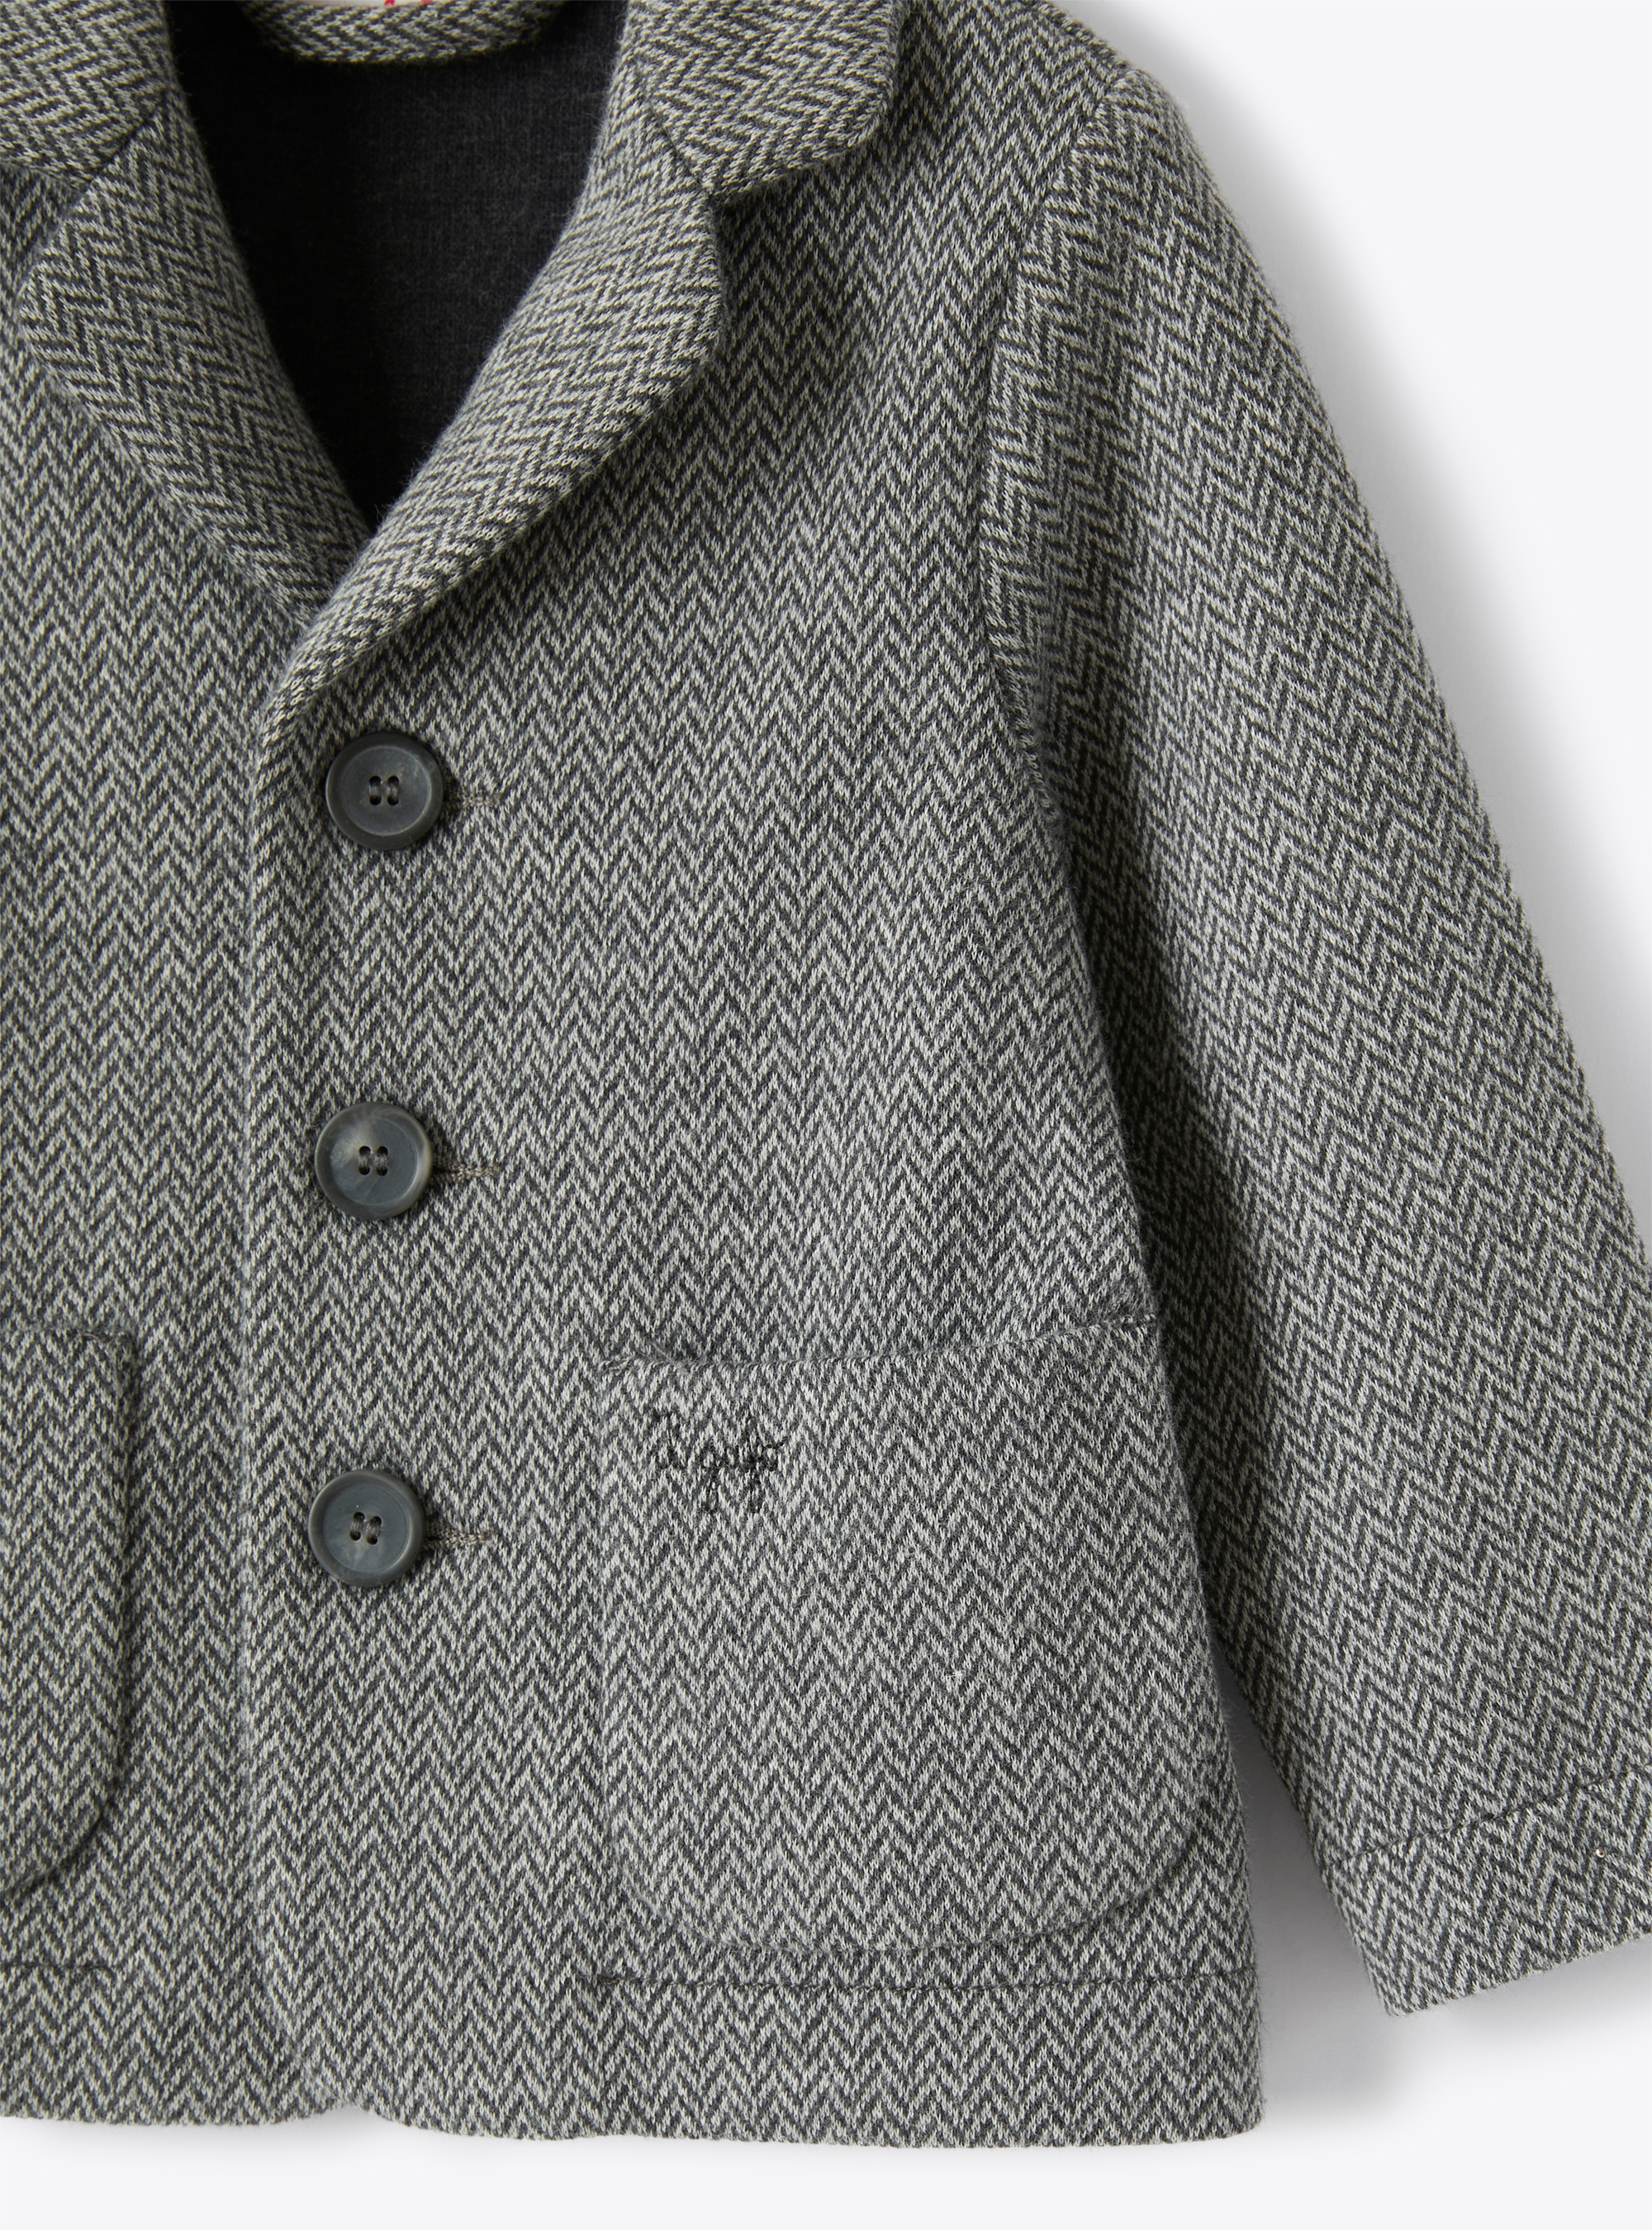 Blazer in grey herringbone-patterned cotton - Grey | Il Gufo